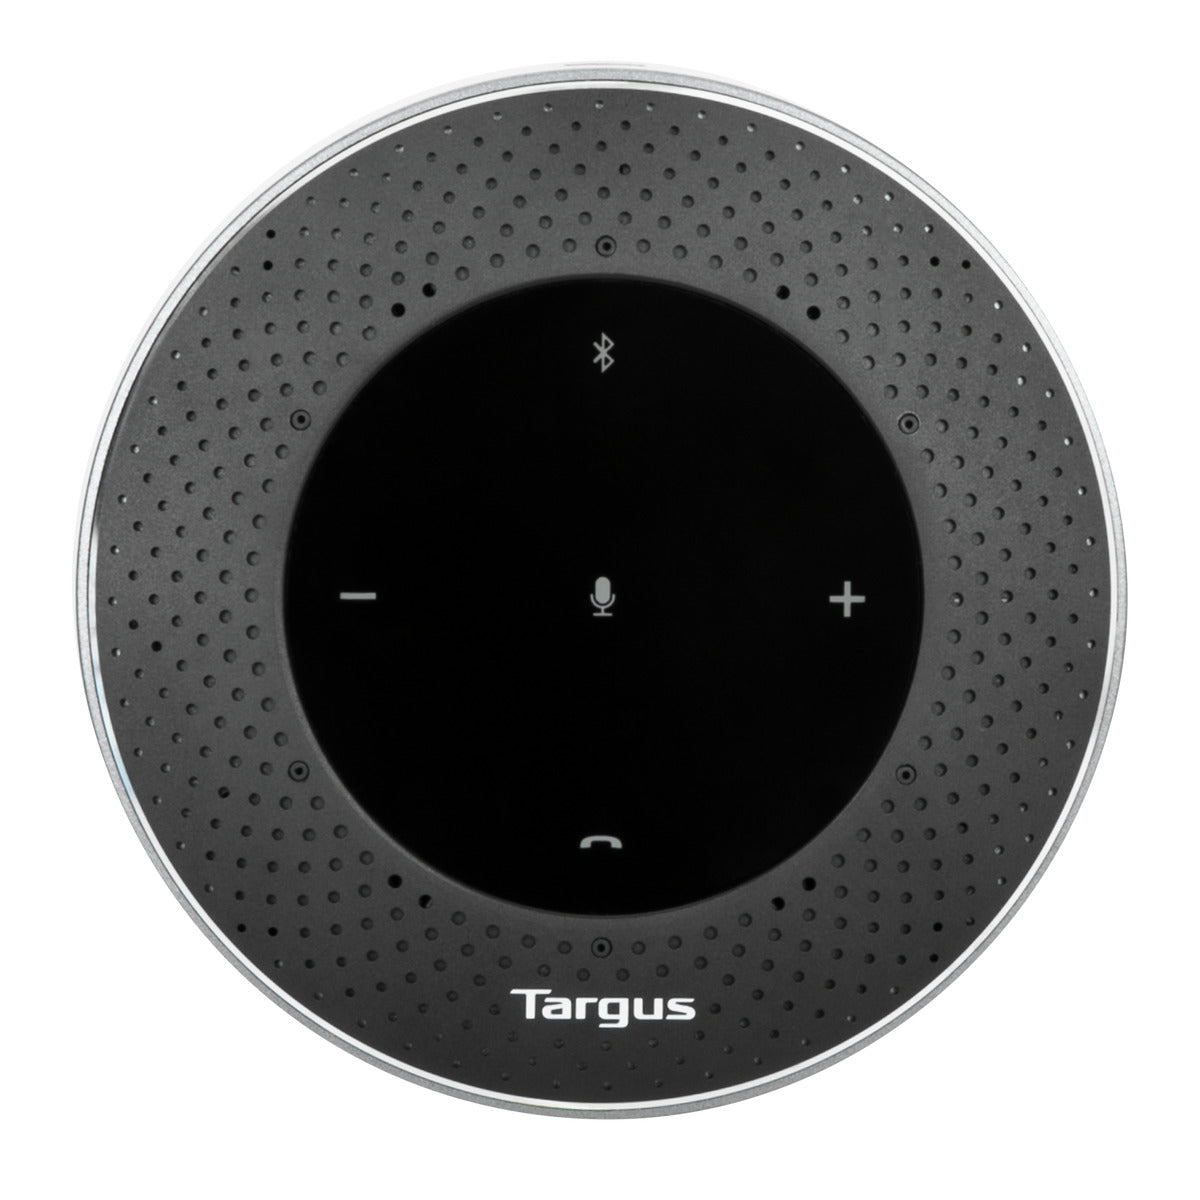 Targus Noise-cancellation Bluetooth Mobile Speakerphone